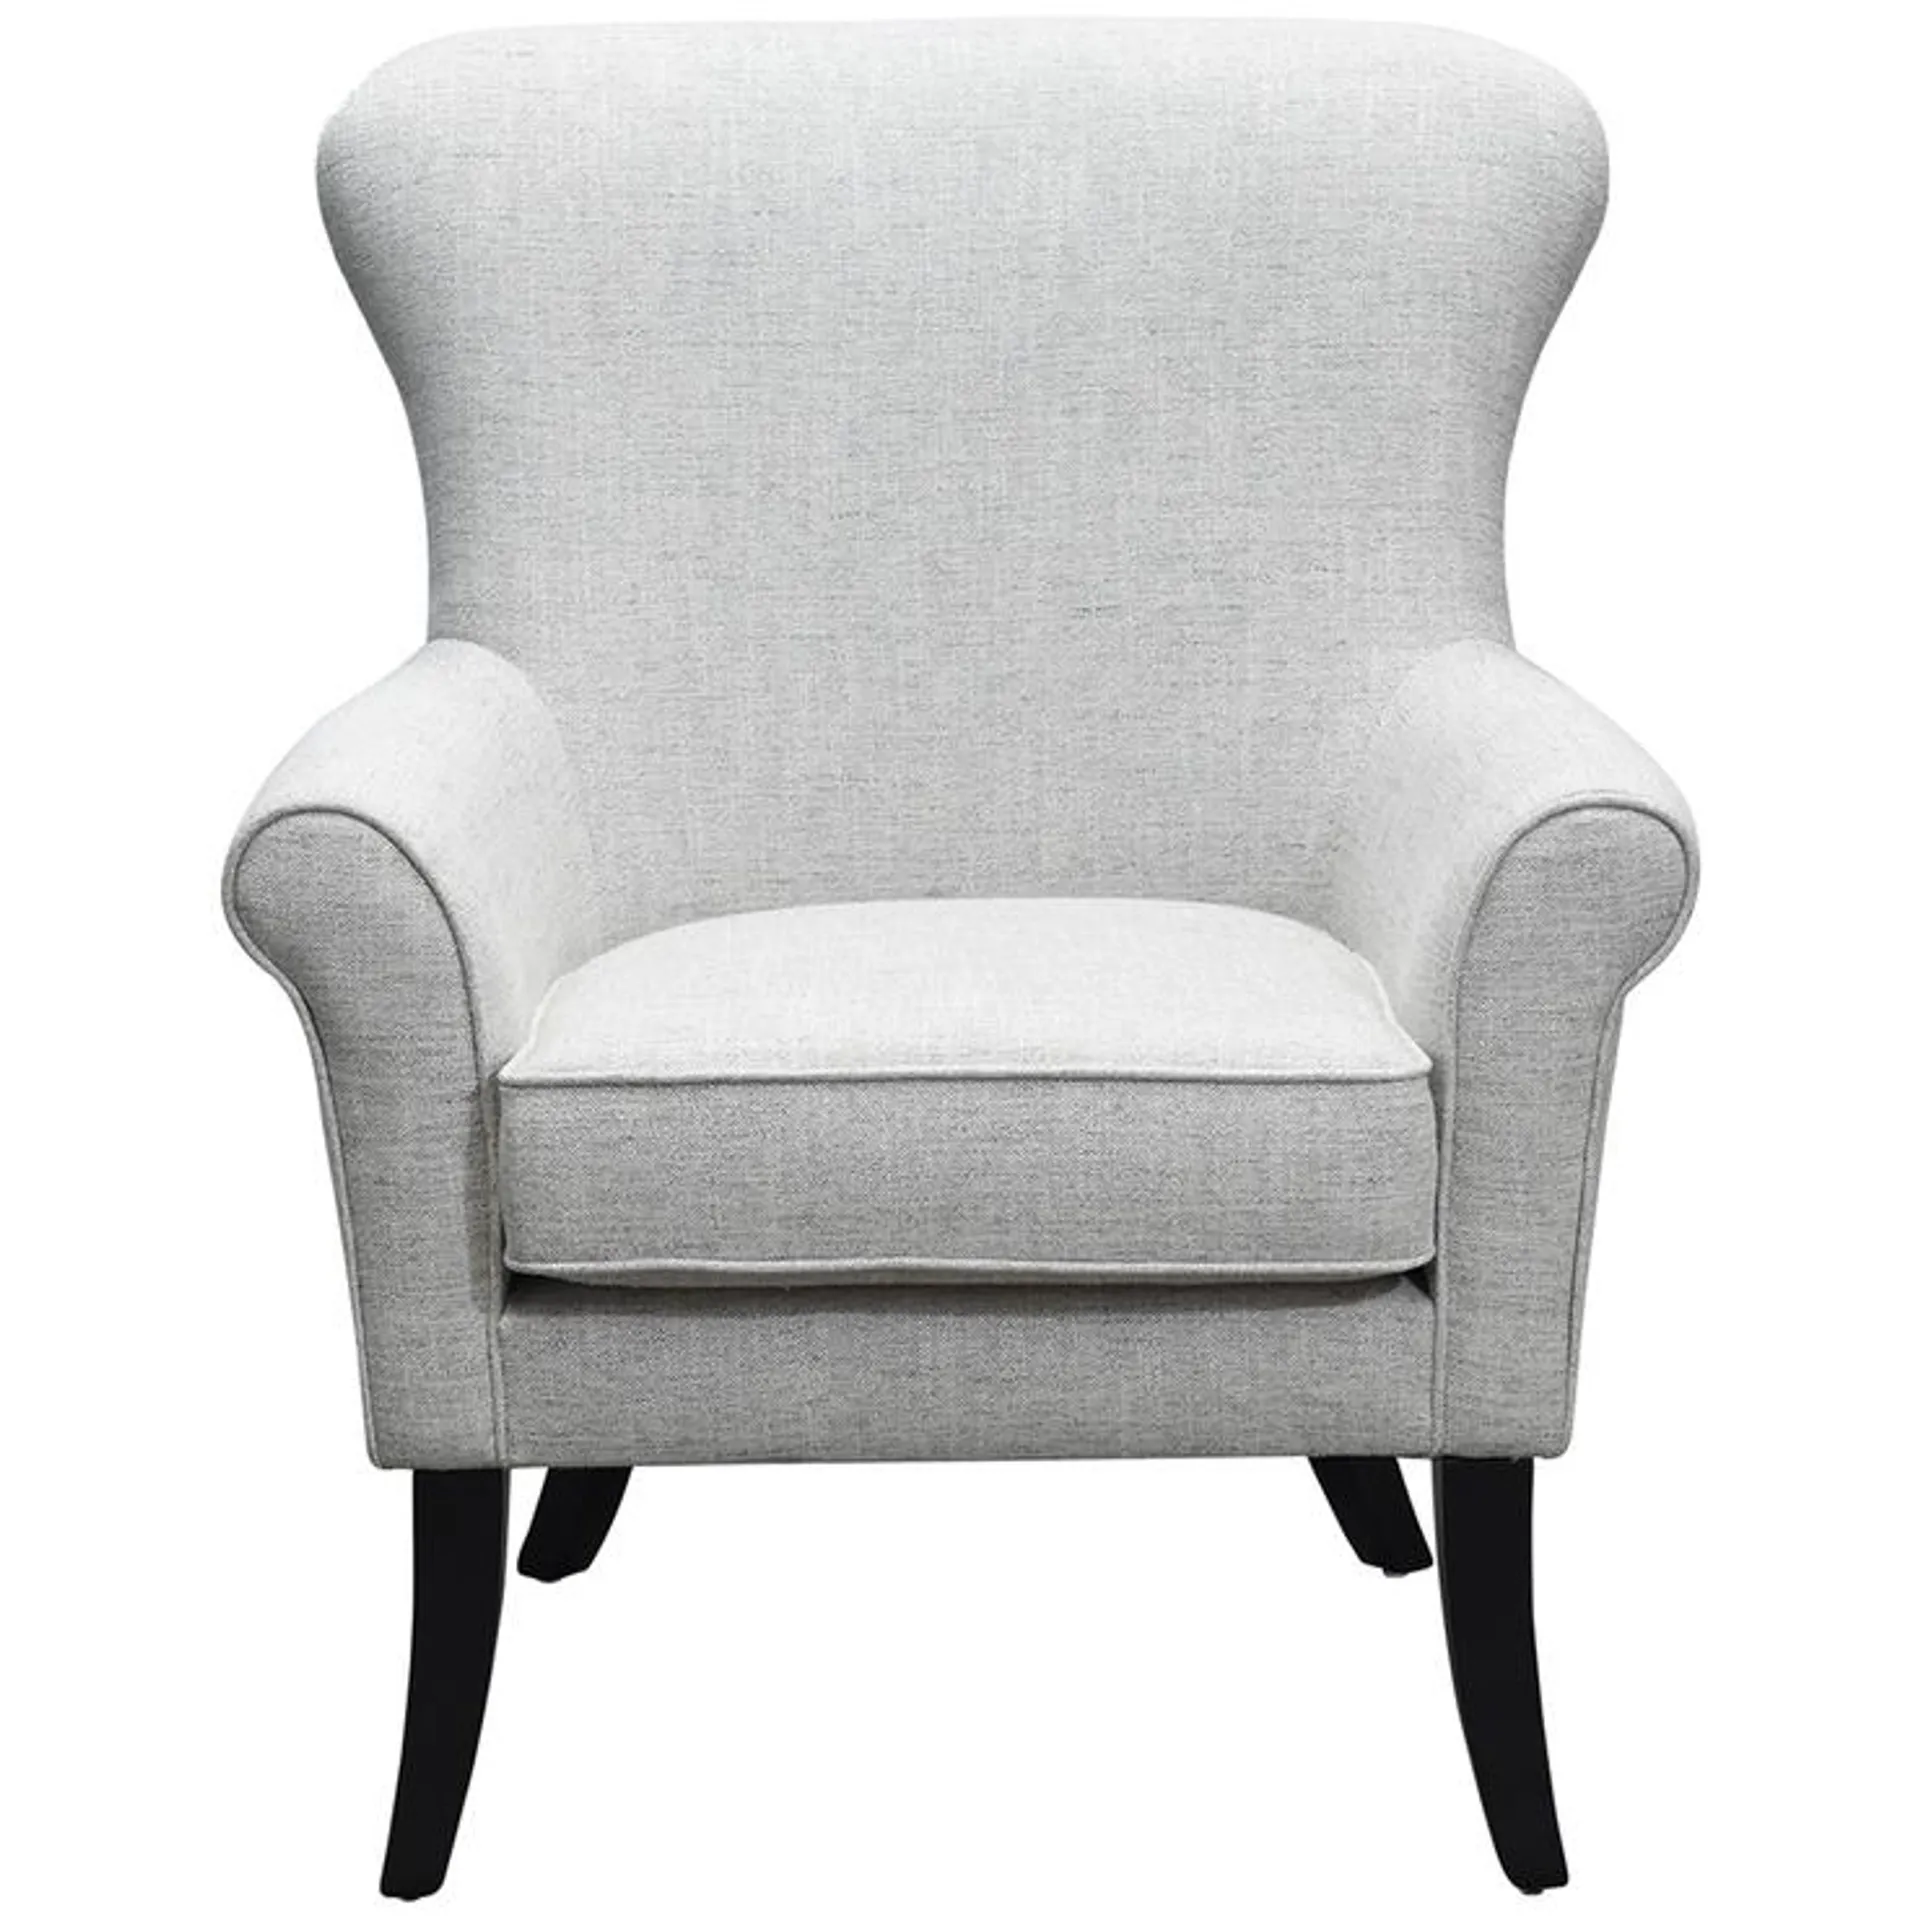 Moran Alberta Plush Fabric Chair